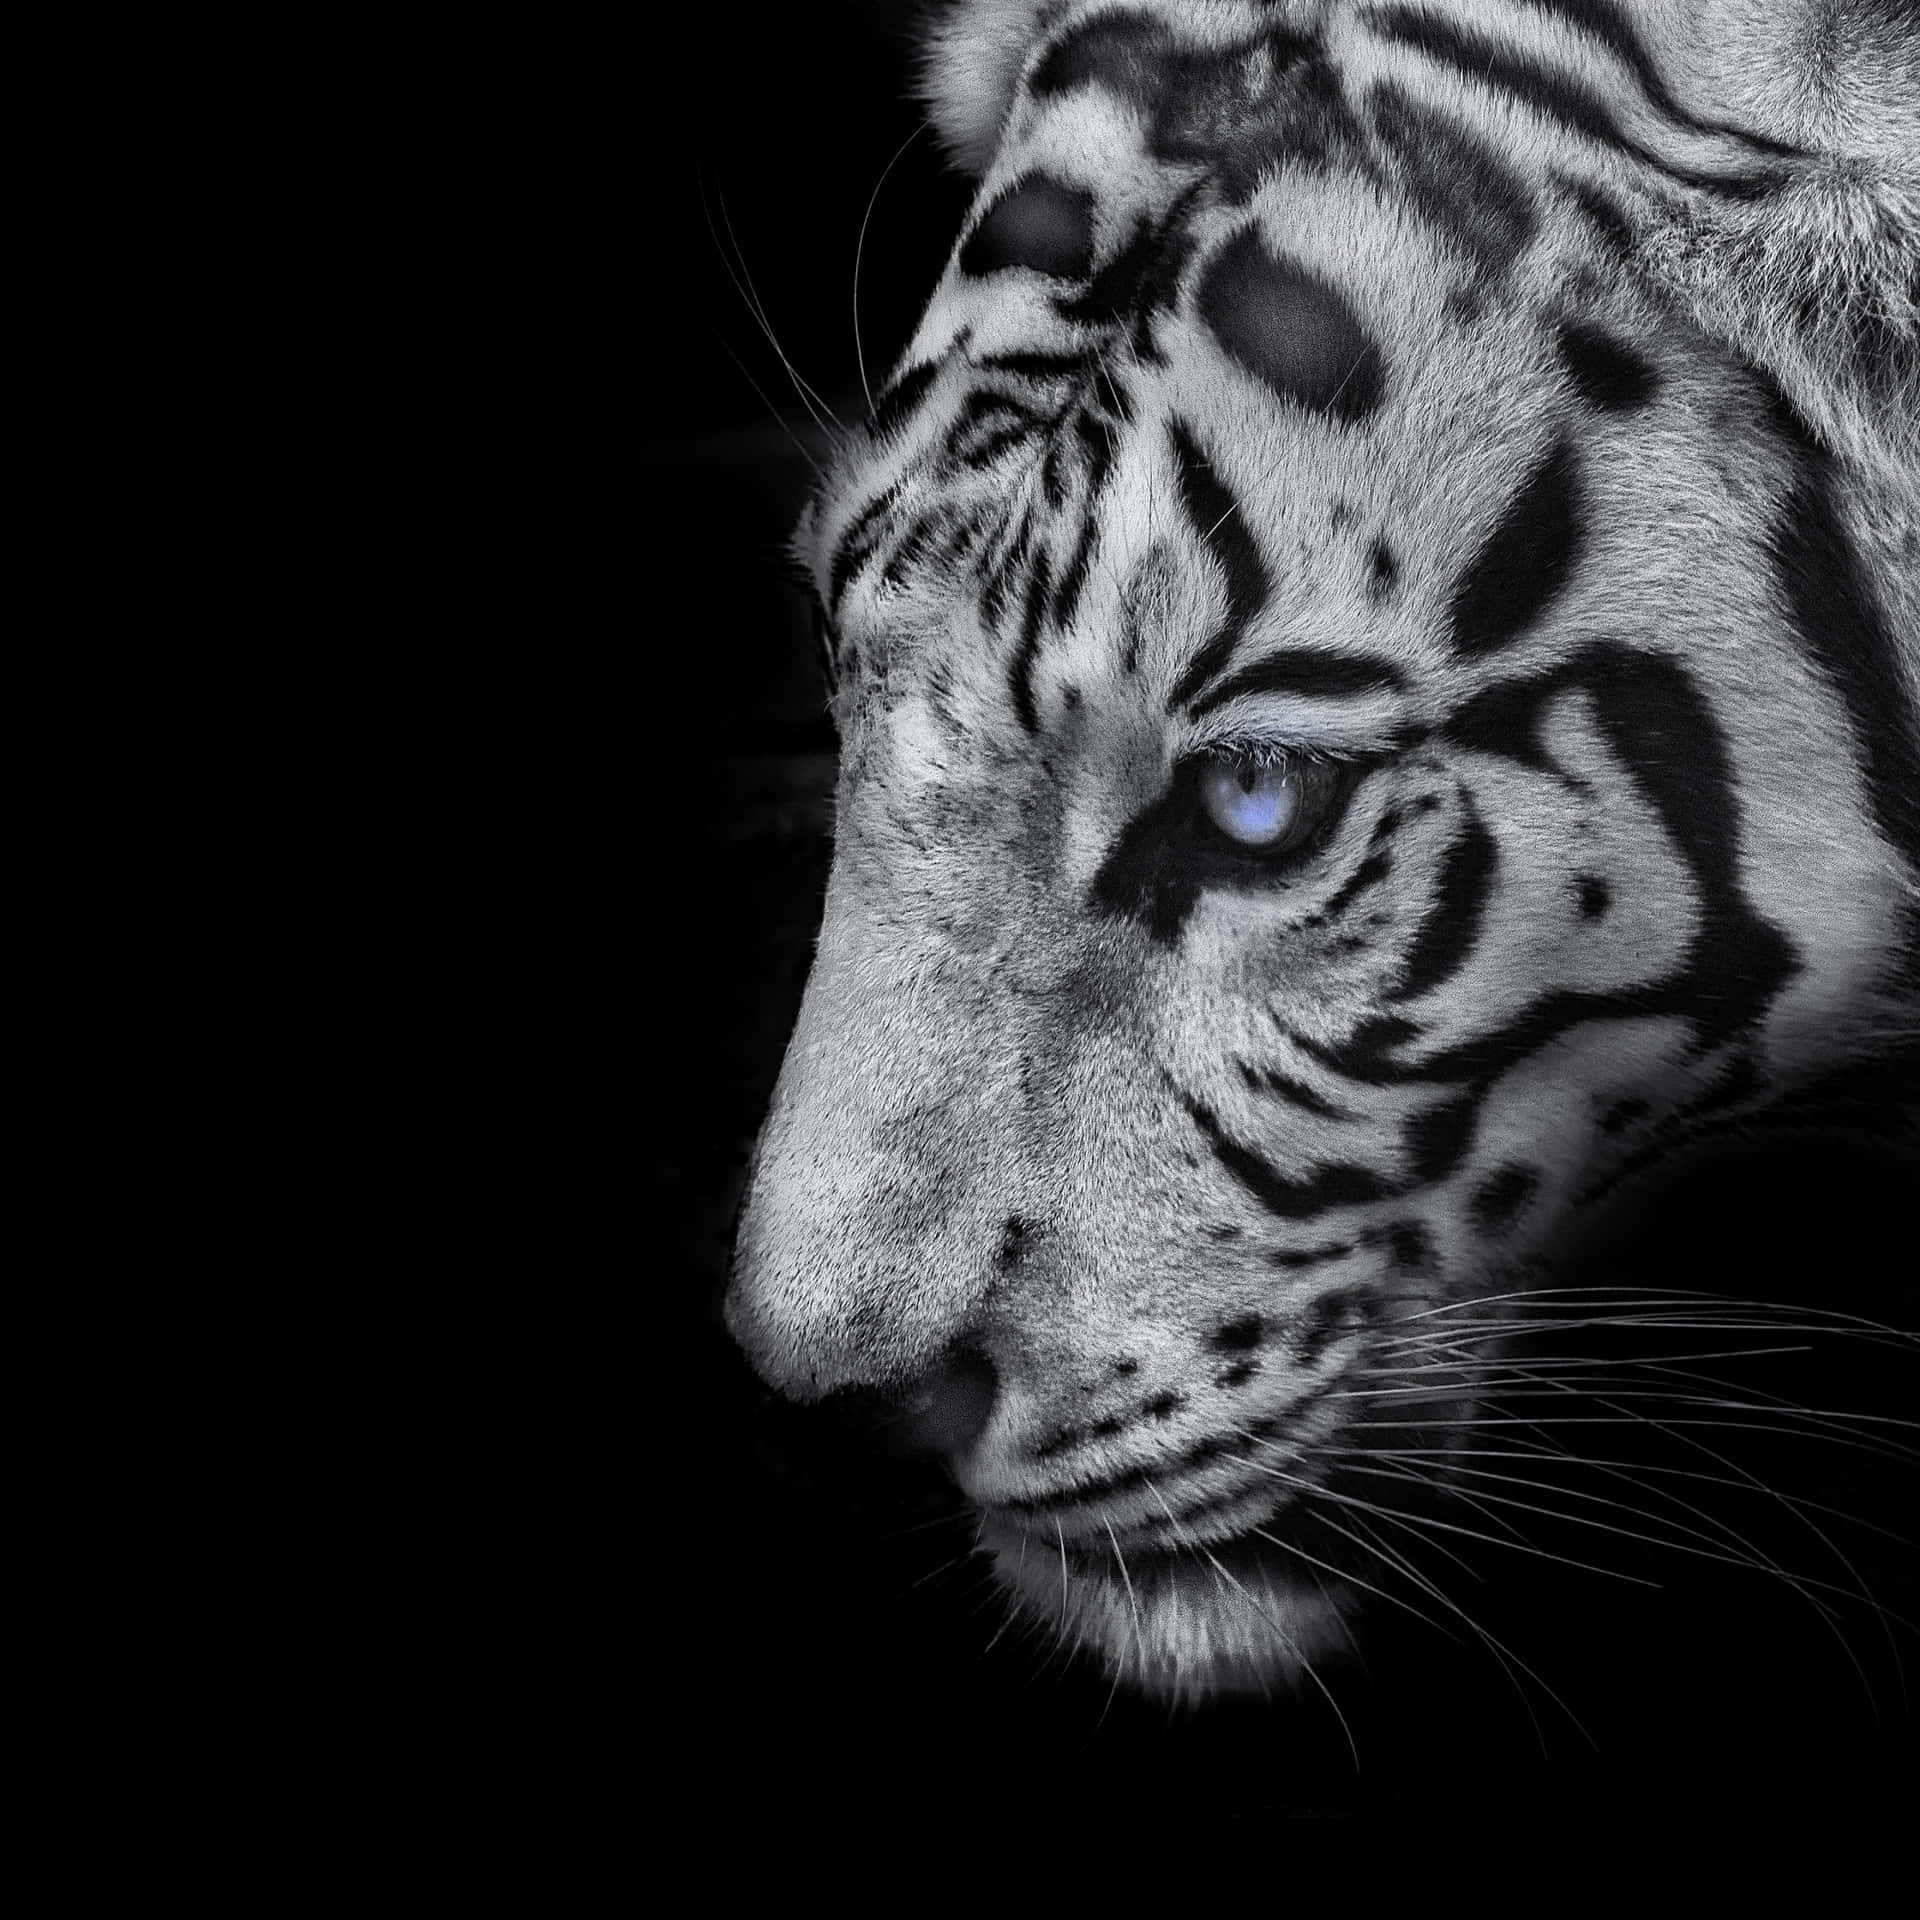 Monochrome Tiger With Blue Eye